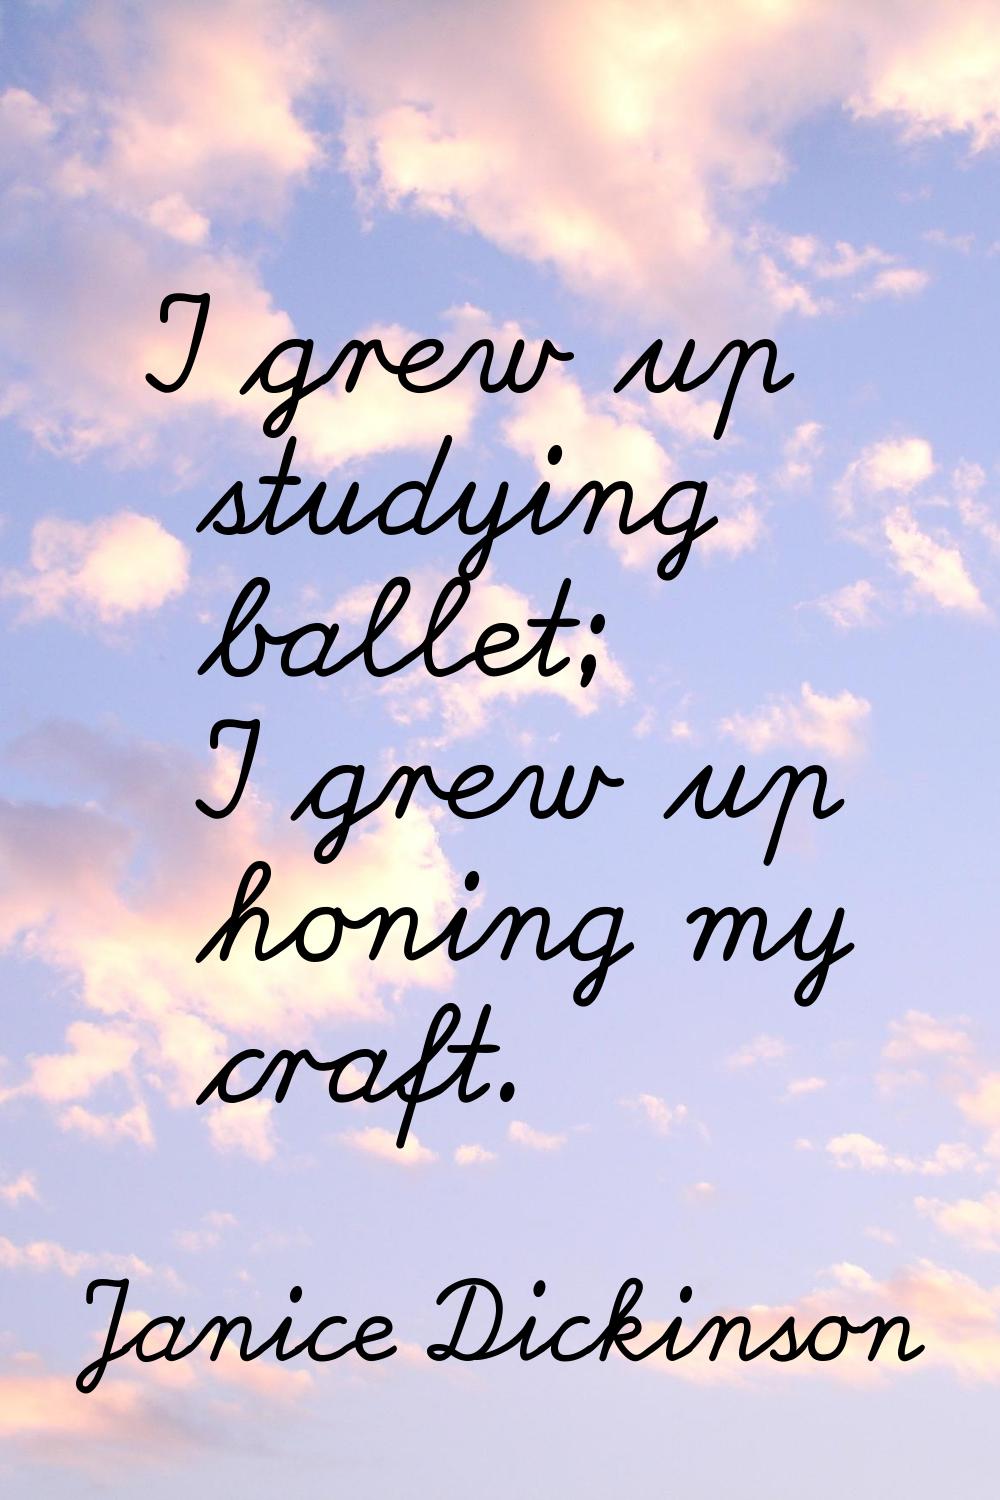 I grew up studying ballet; I grew up honing my craft.